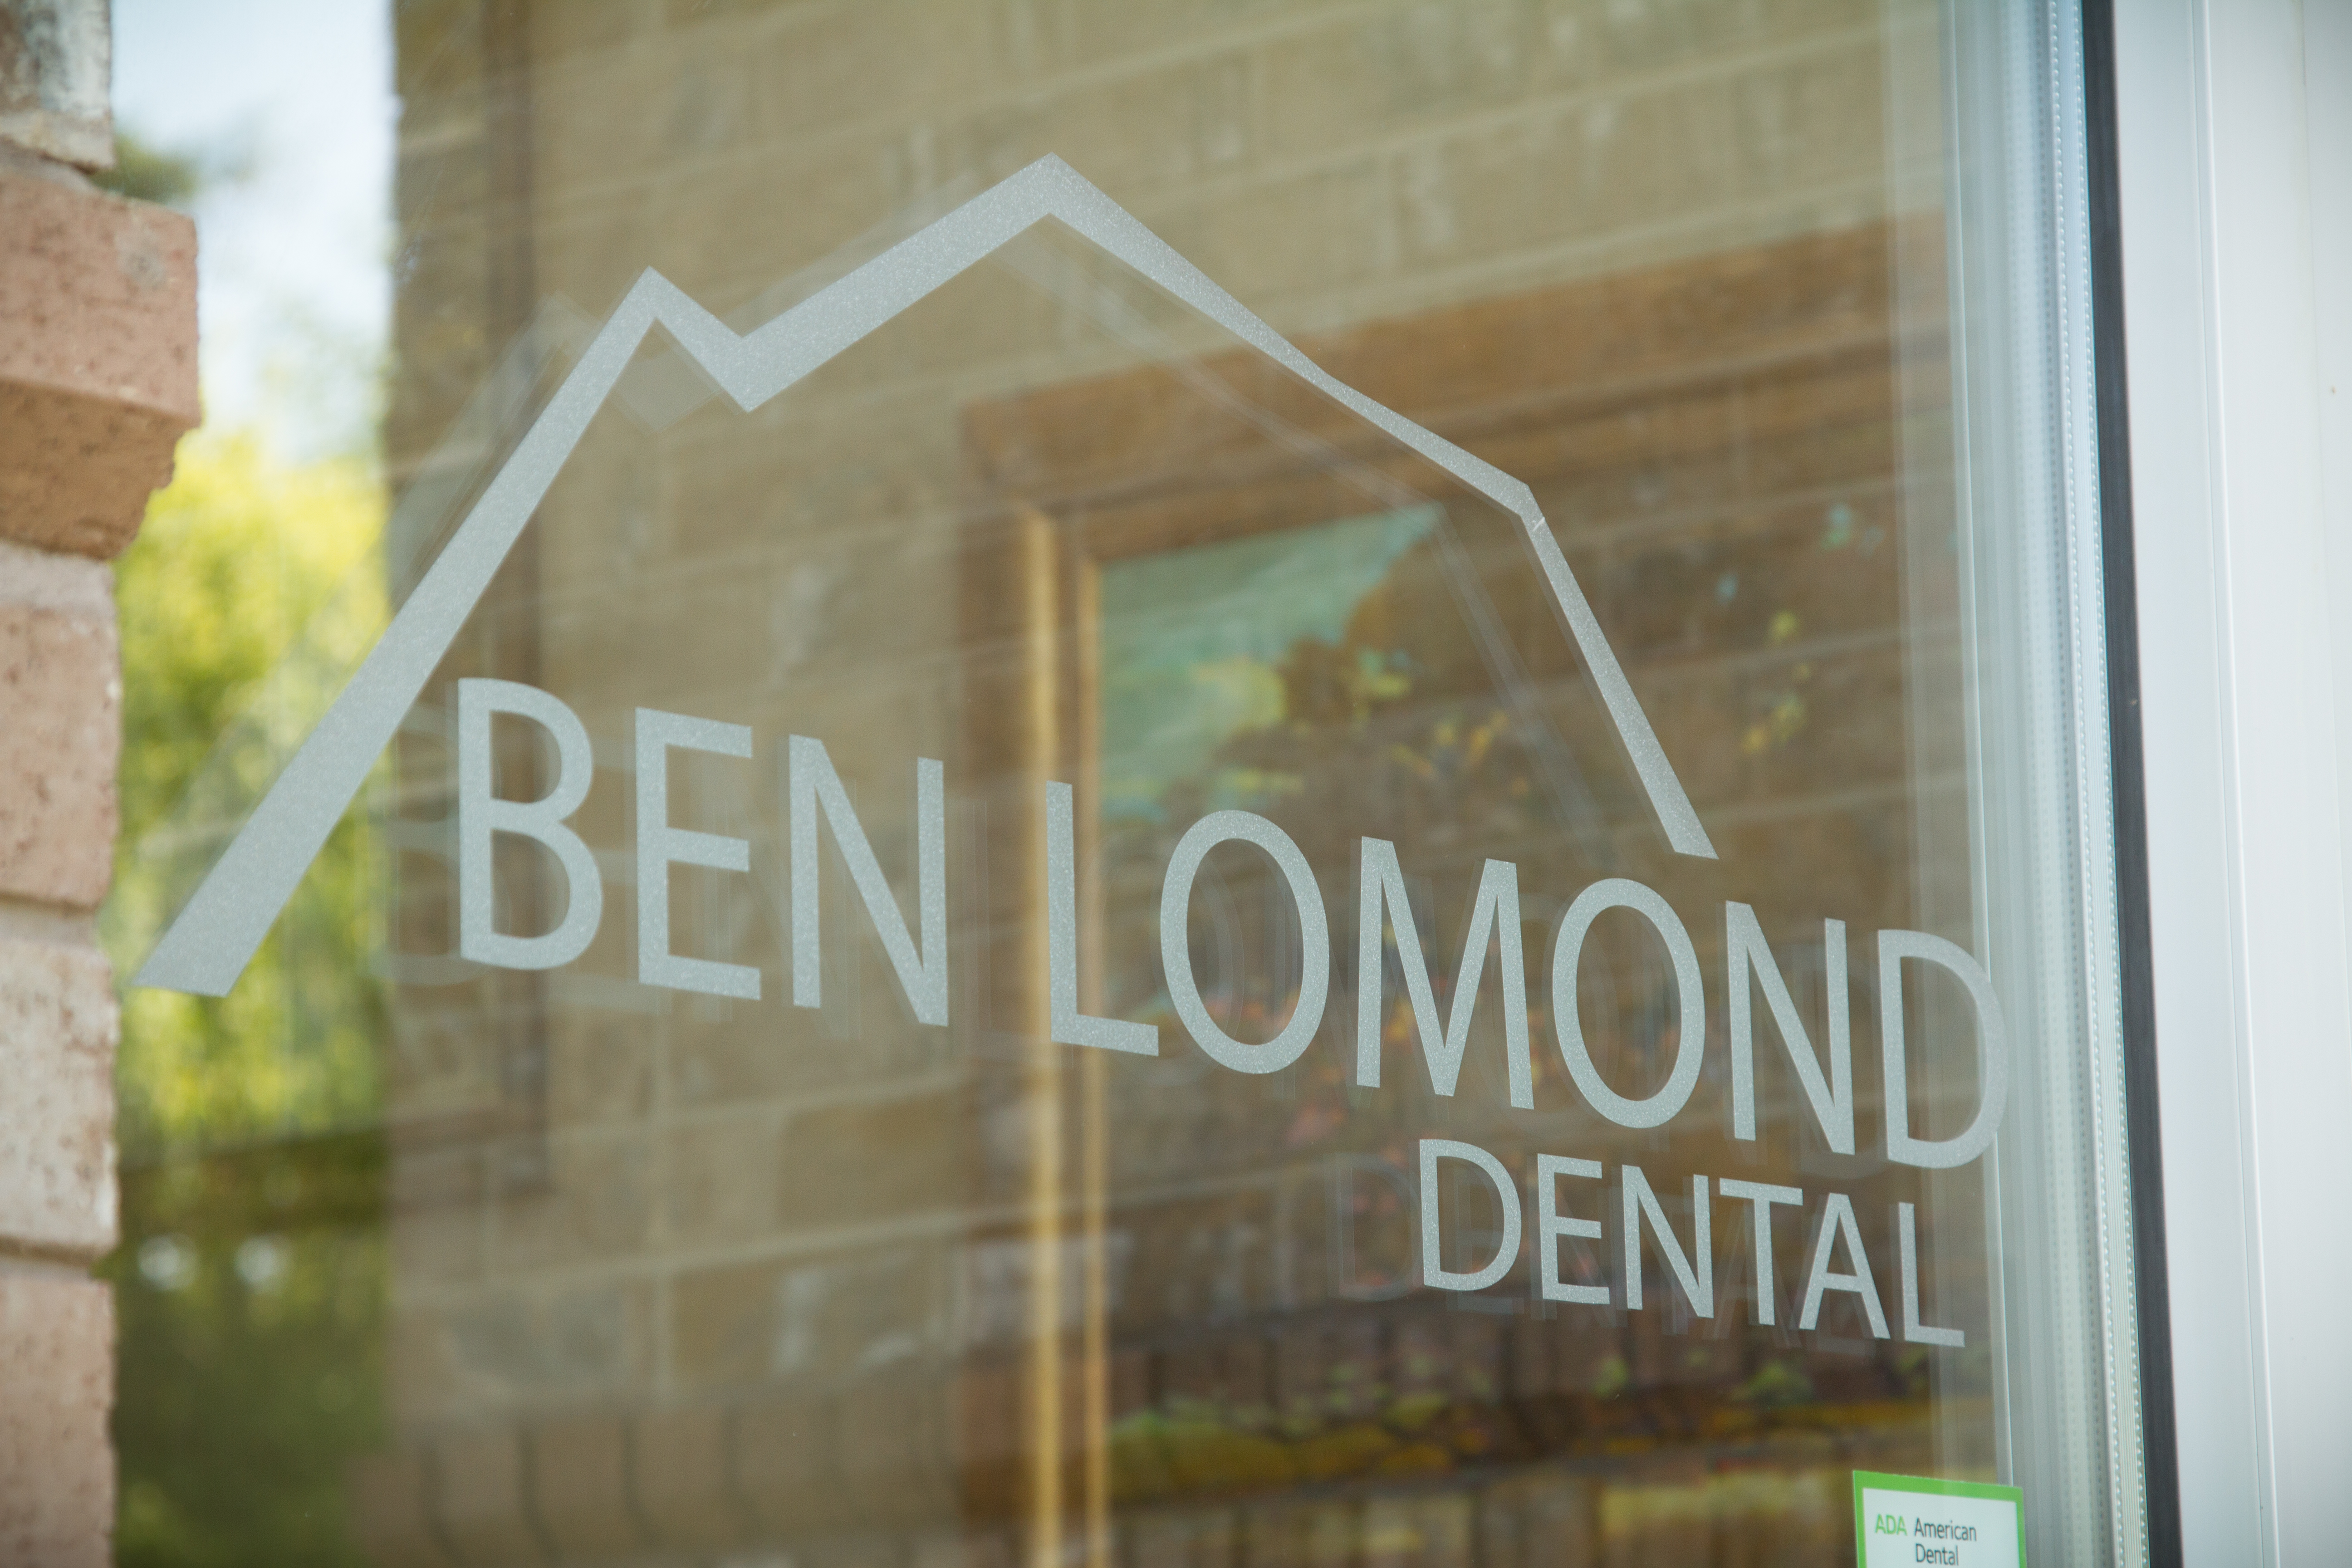 Ben Lomond Dental logo on glass door services